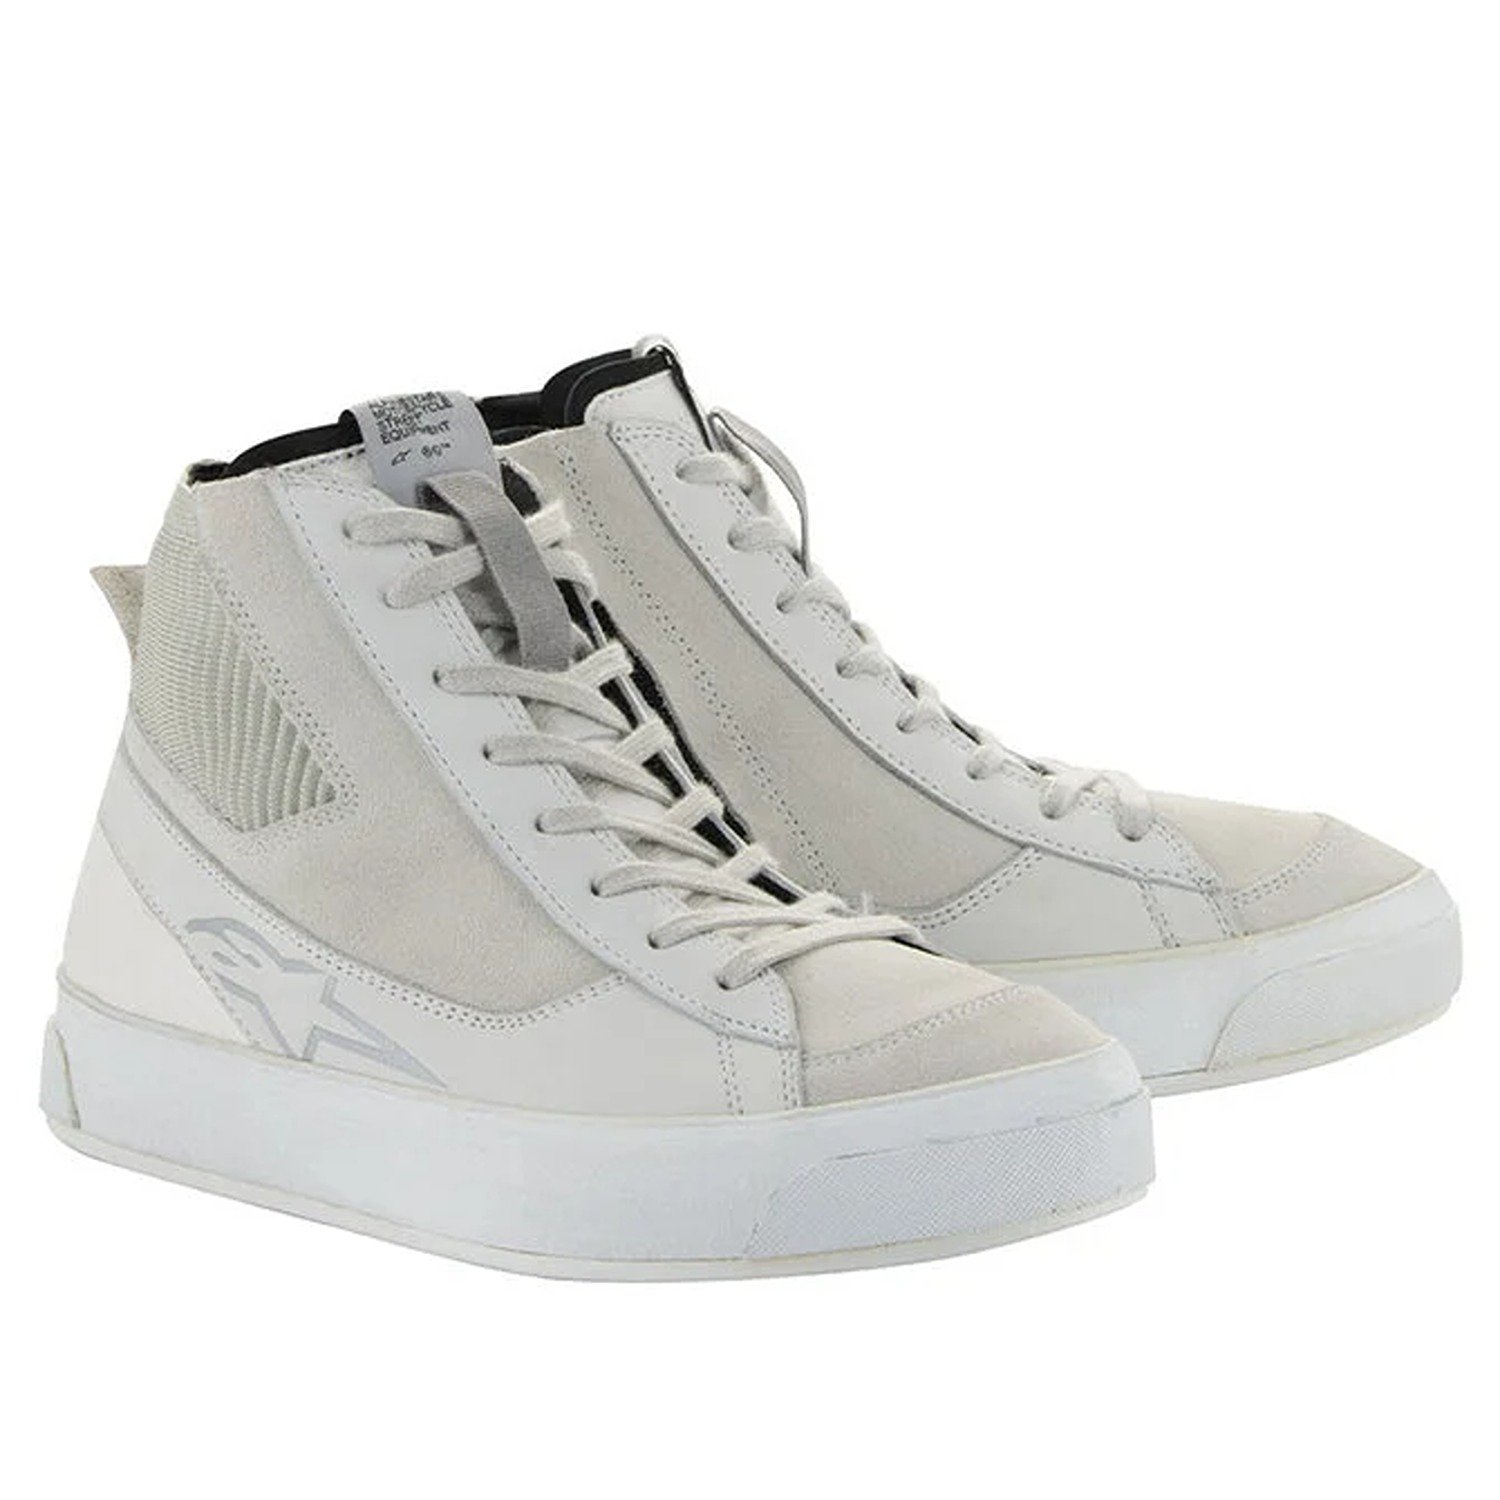 Image of Alpinestars Stella Stated Podium Shoes White Cool Gray Size US 11 ID 8059347350202